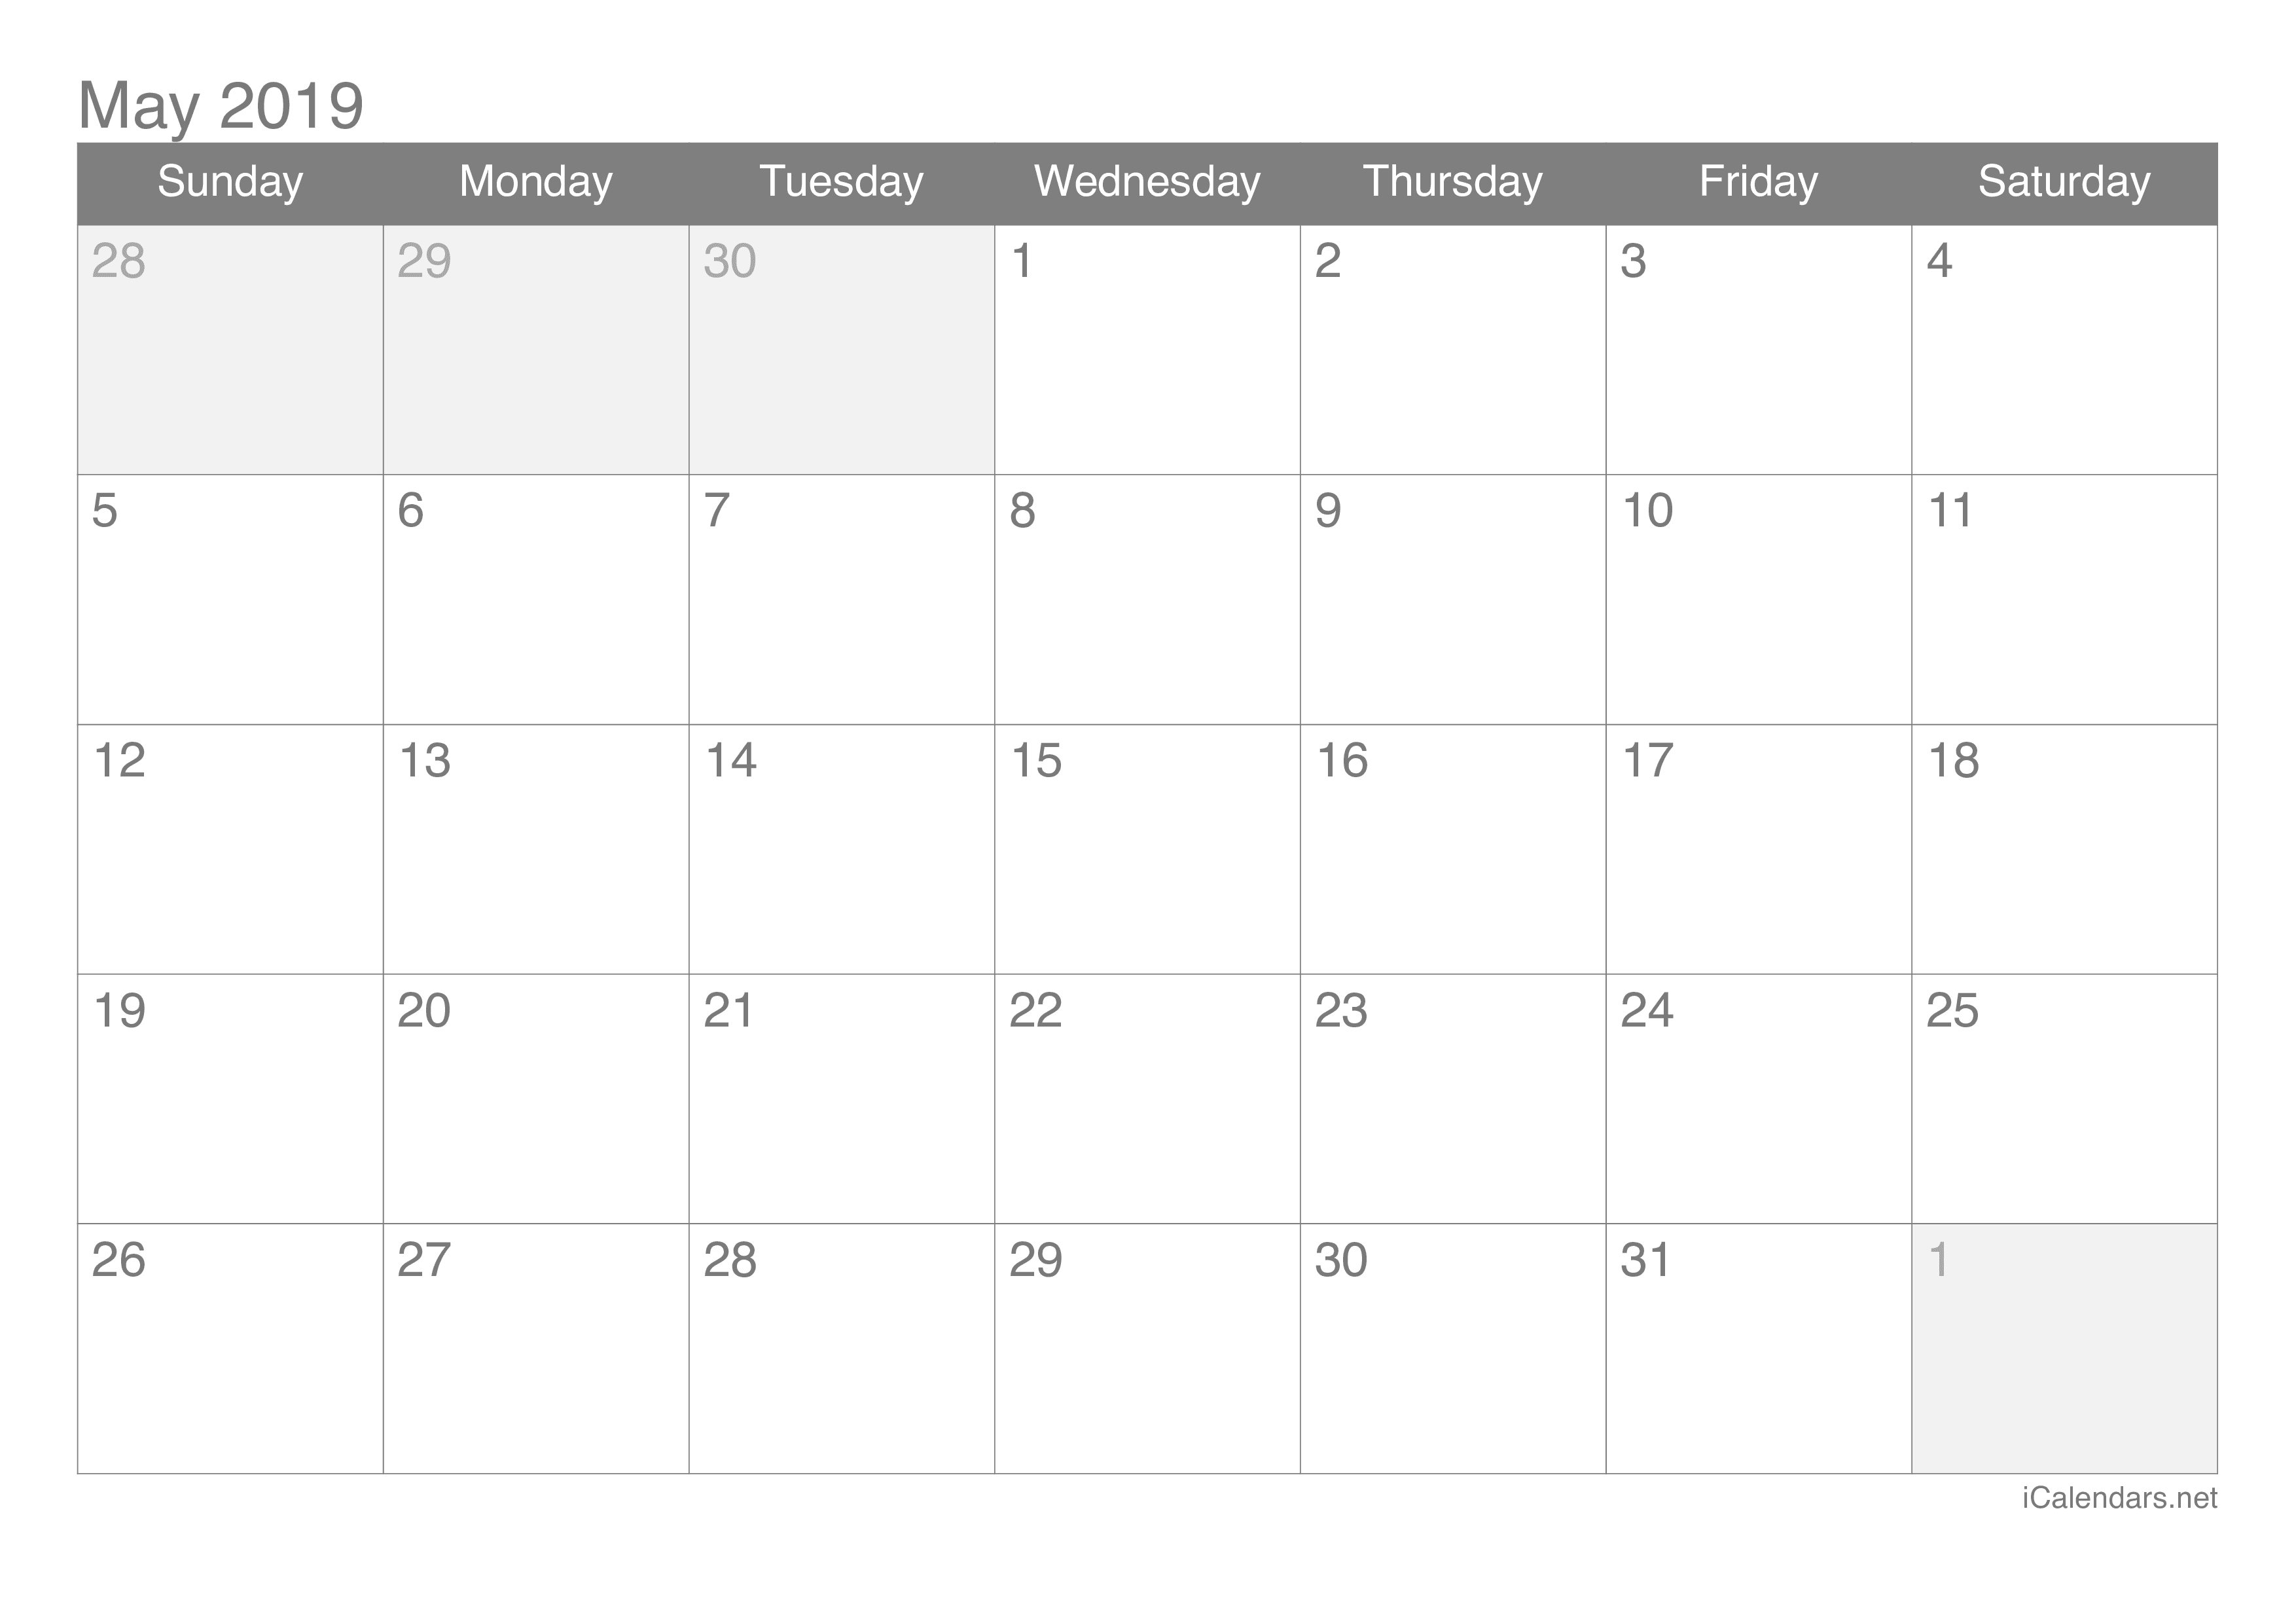 May 2019 Printable Calendar icalendars net